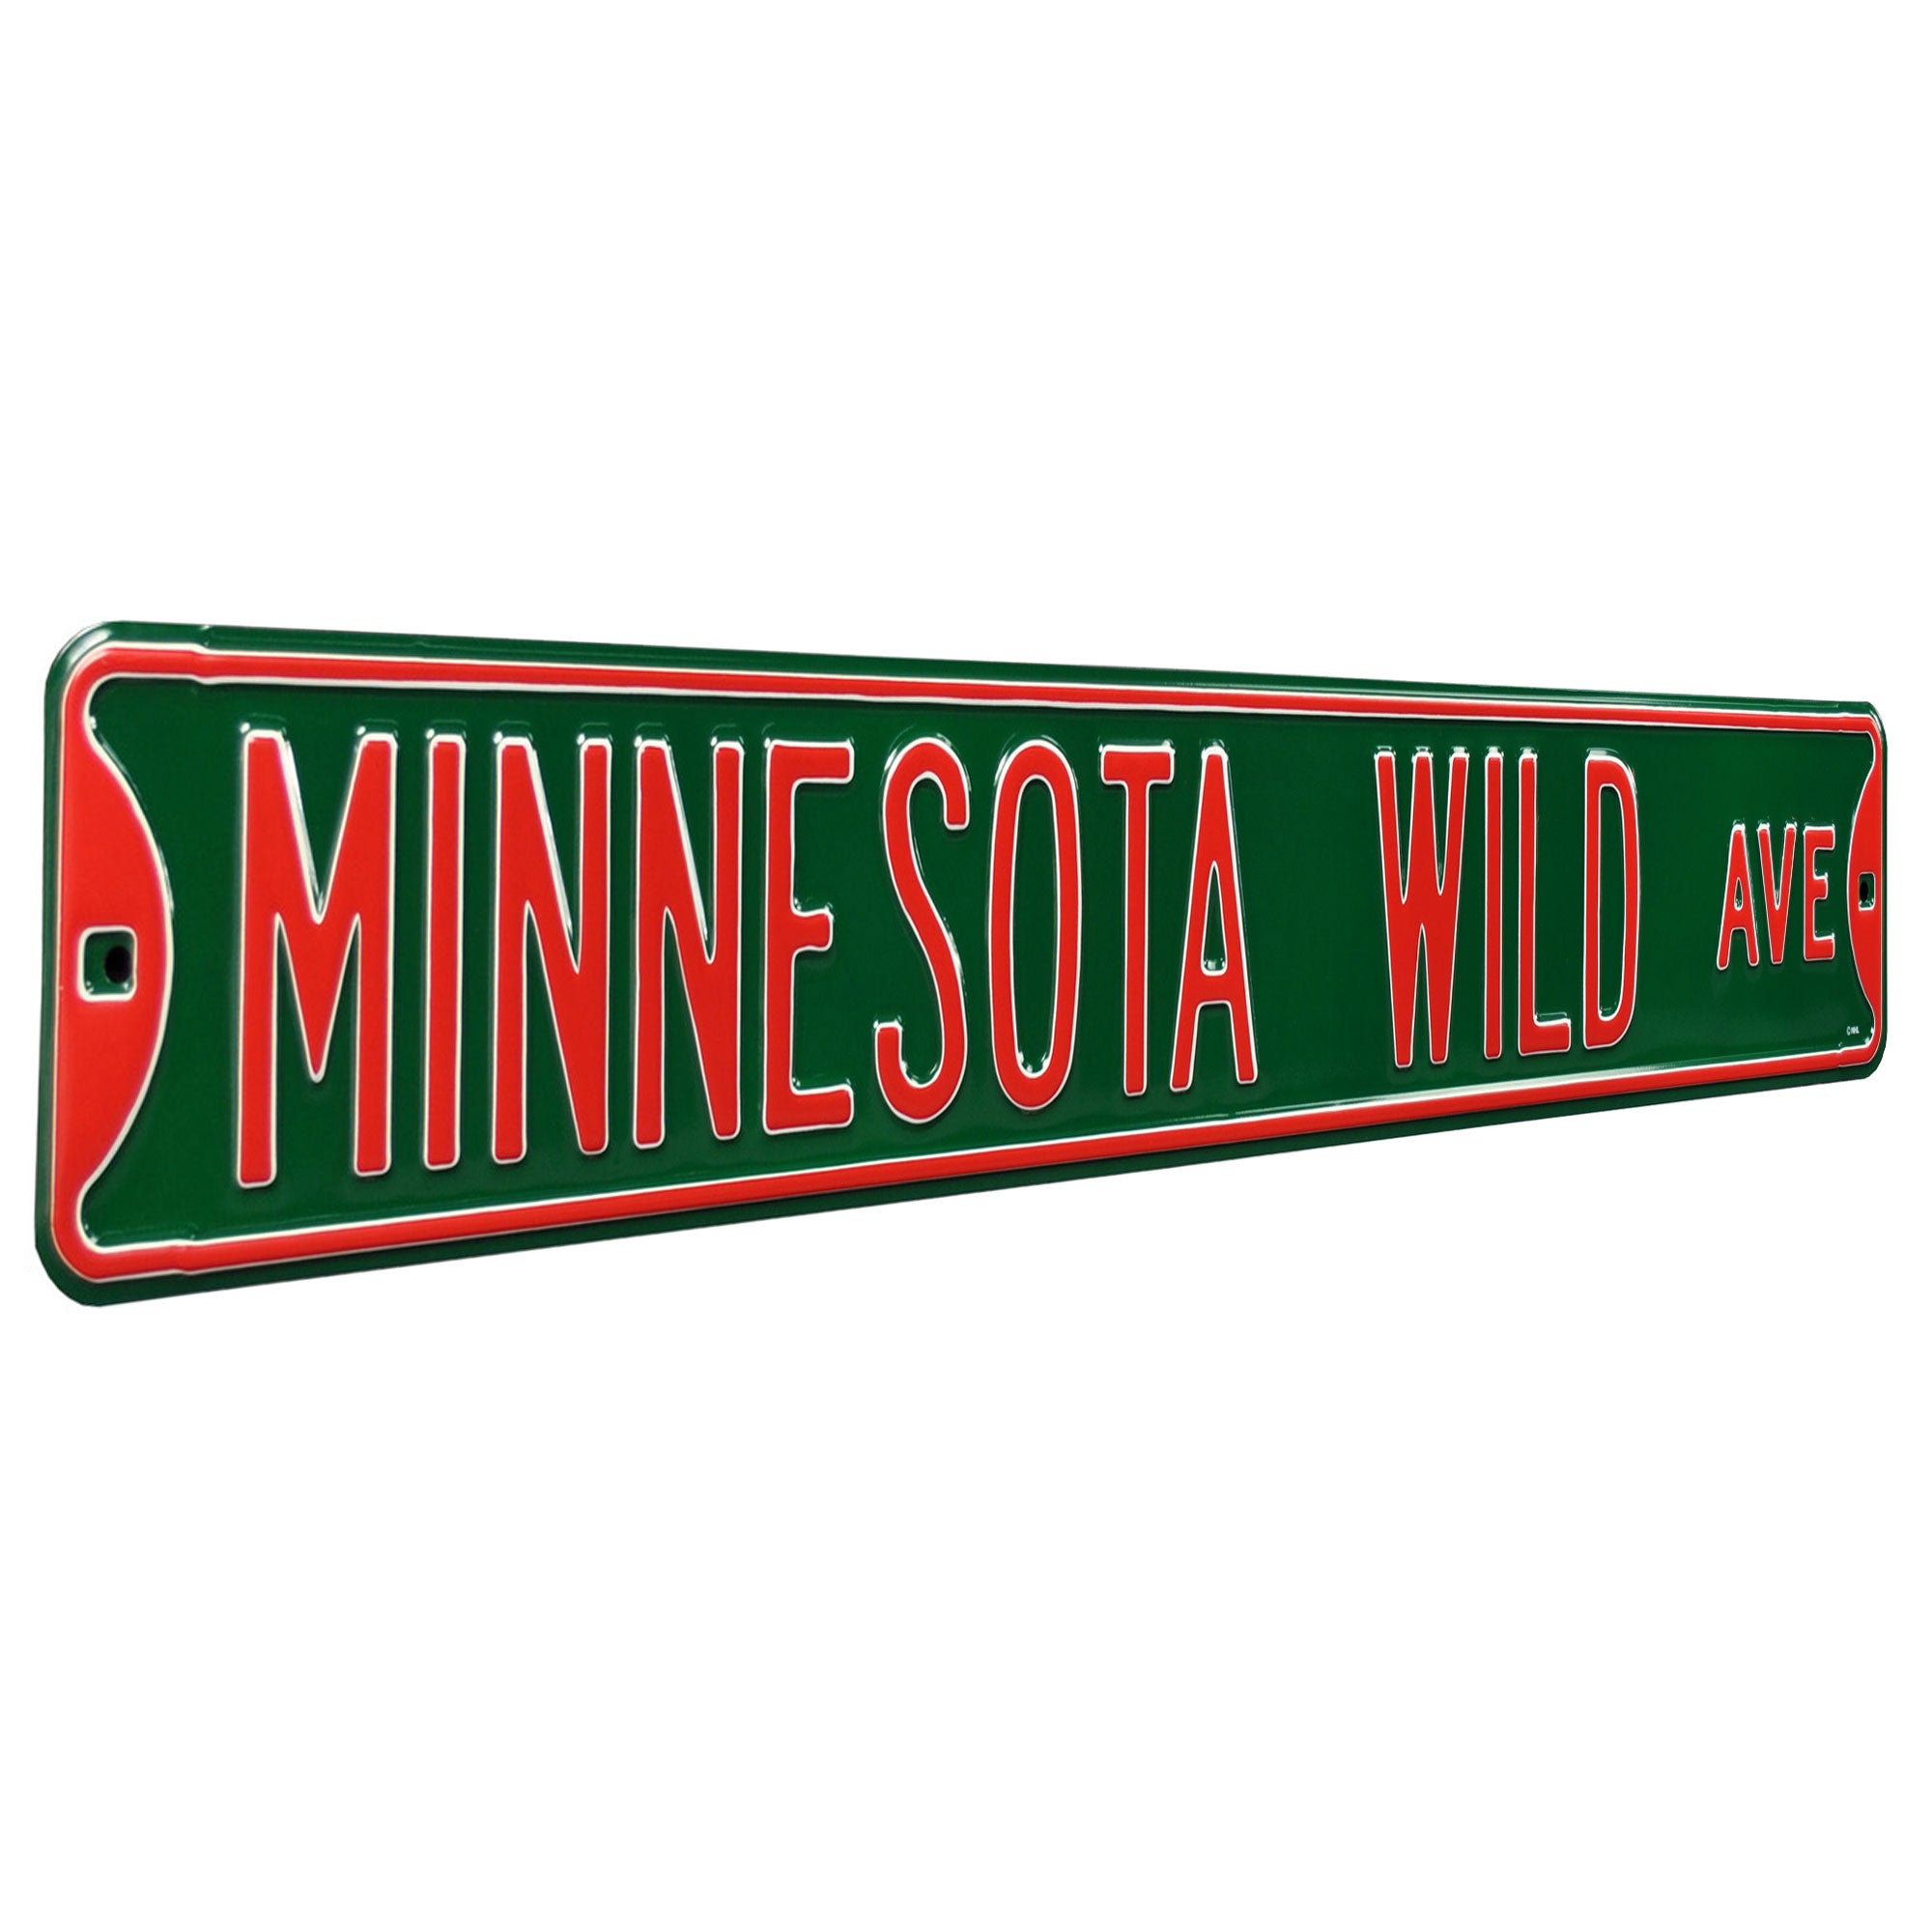 Minnesota Wild Avenue Street Sign